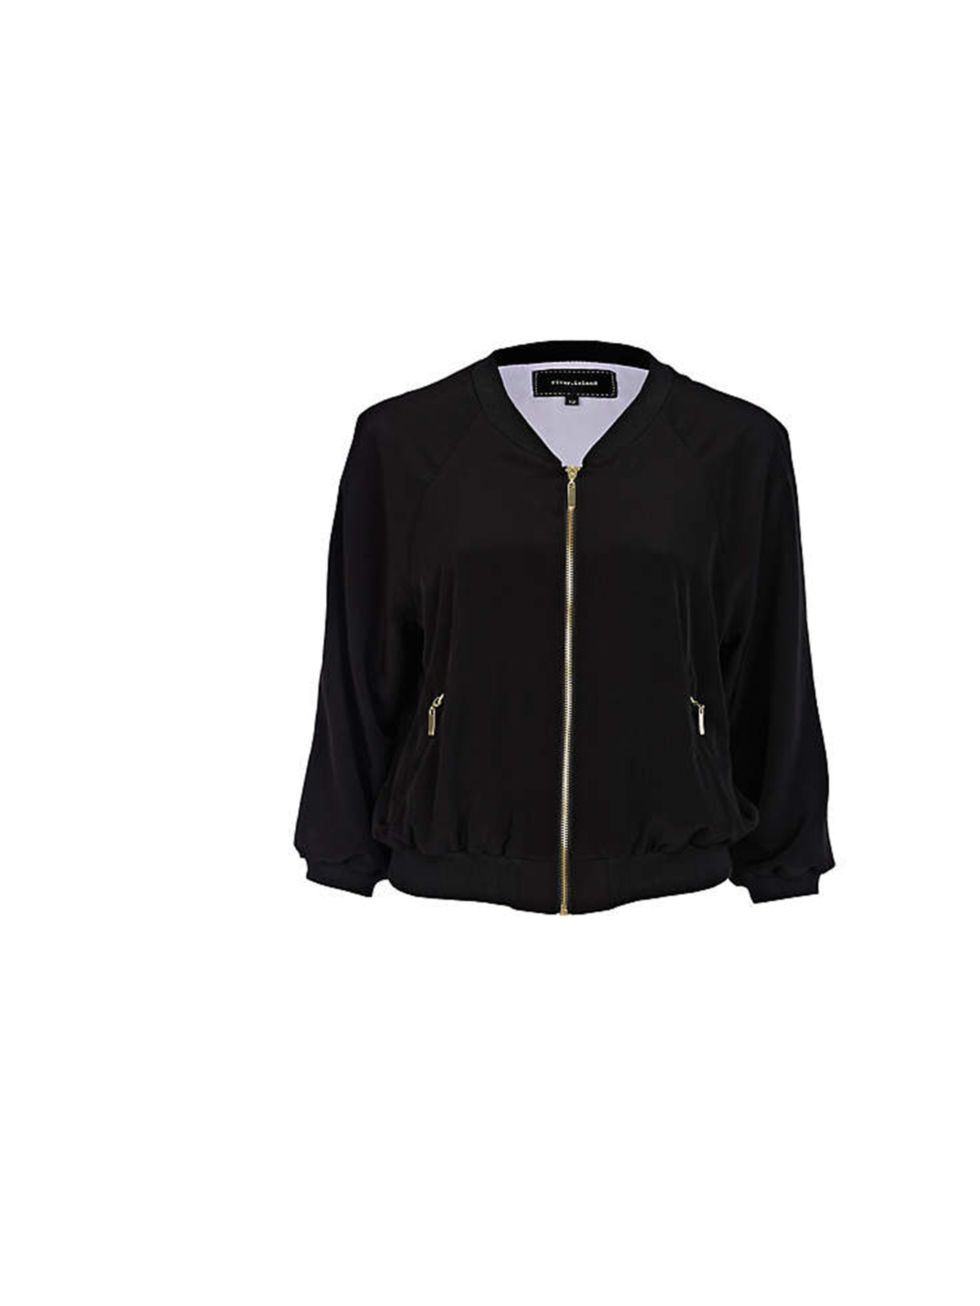 <p><a href="http://www.riverisland.com/Online/women/coats--jackets/jackets/black-bomber-jacket-618610">River Island</a> black bomber jacket, £35</p>